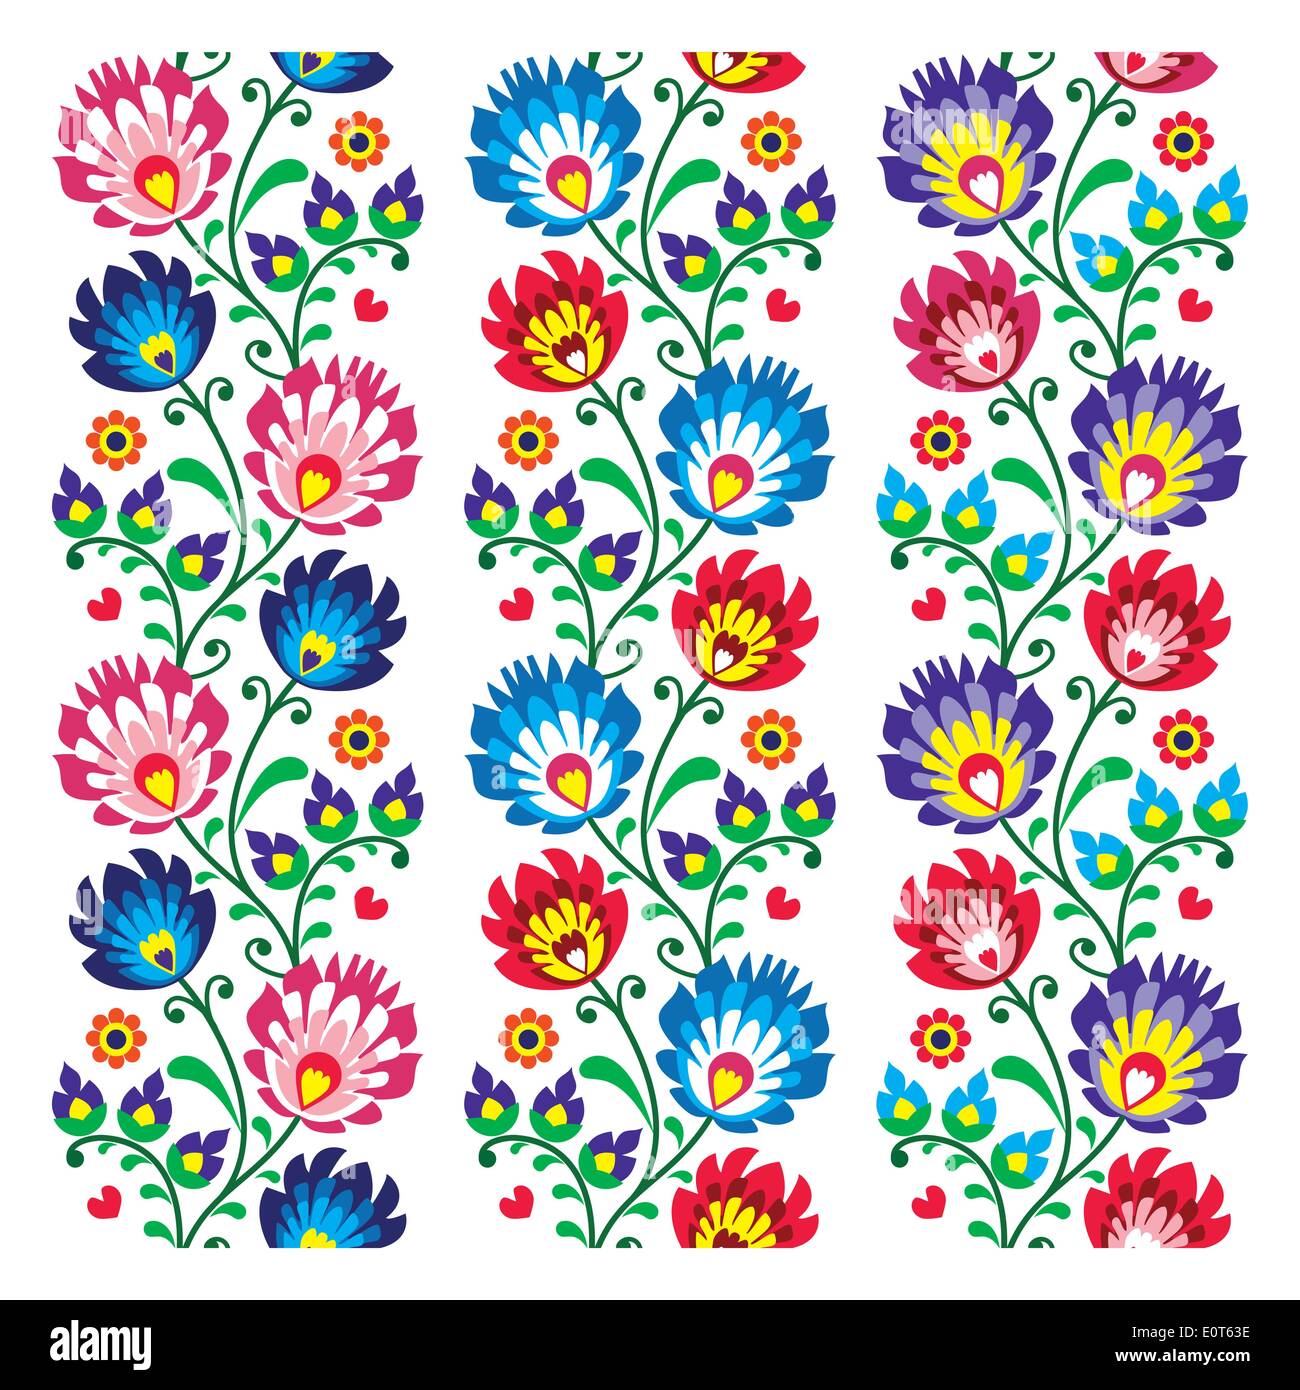 Seamless folk art Polish pattern - wzor lowicki wycinanki  Repetitive colorful floral background - folk art print from Poland Stock Vector